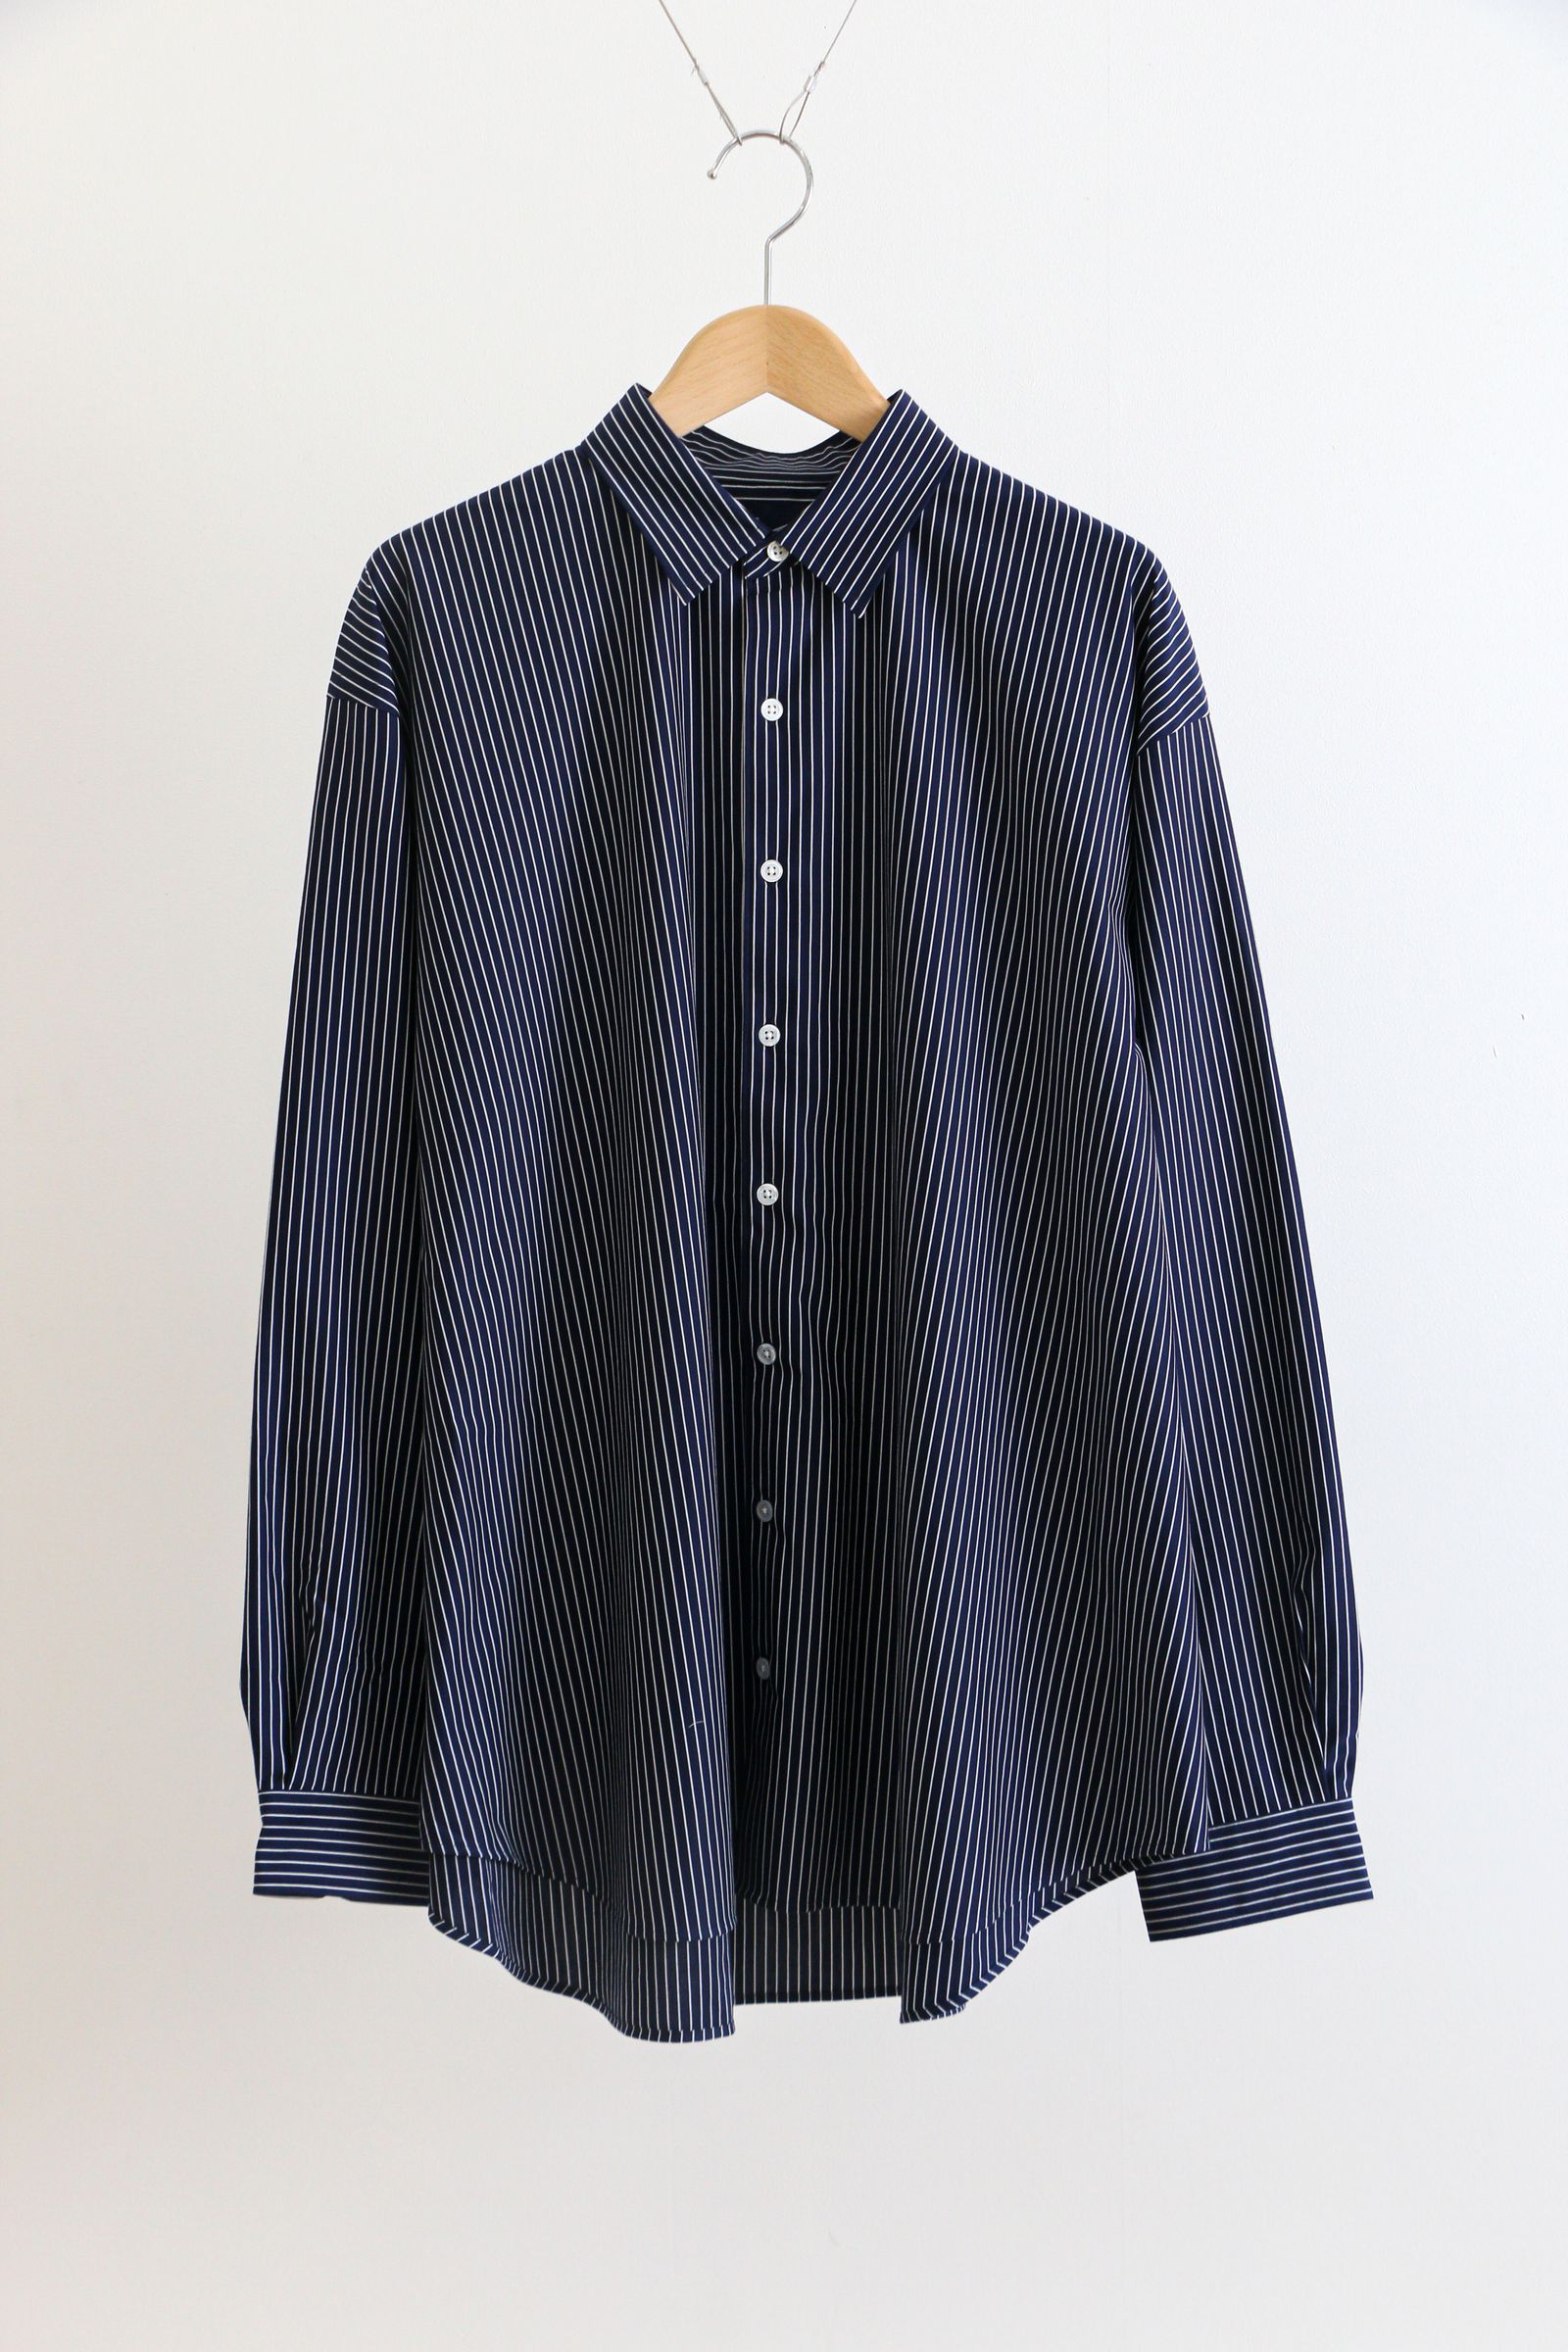 KANEMASA PHIL. - Pencil Stripe Dress Jersey Shirt / NAVY SP /オーバーサイズ / シャツ  / ストライプ | koko